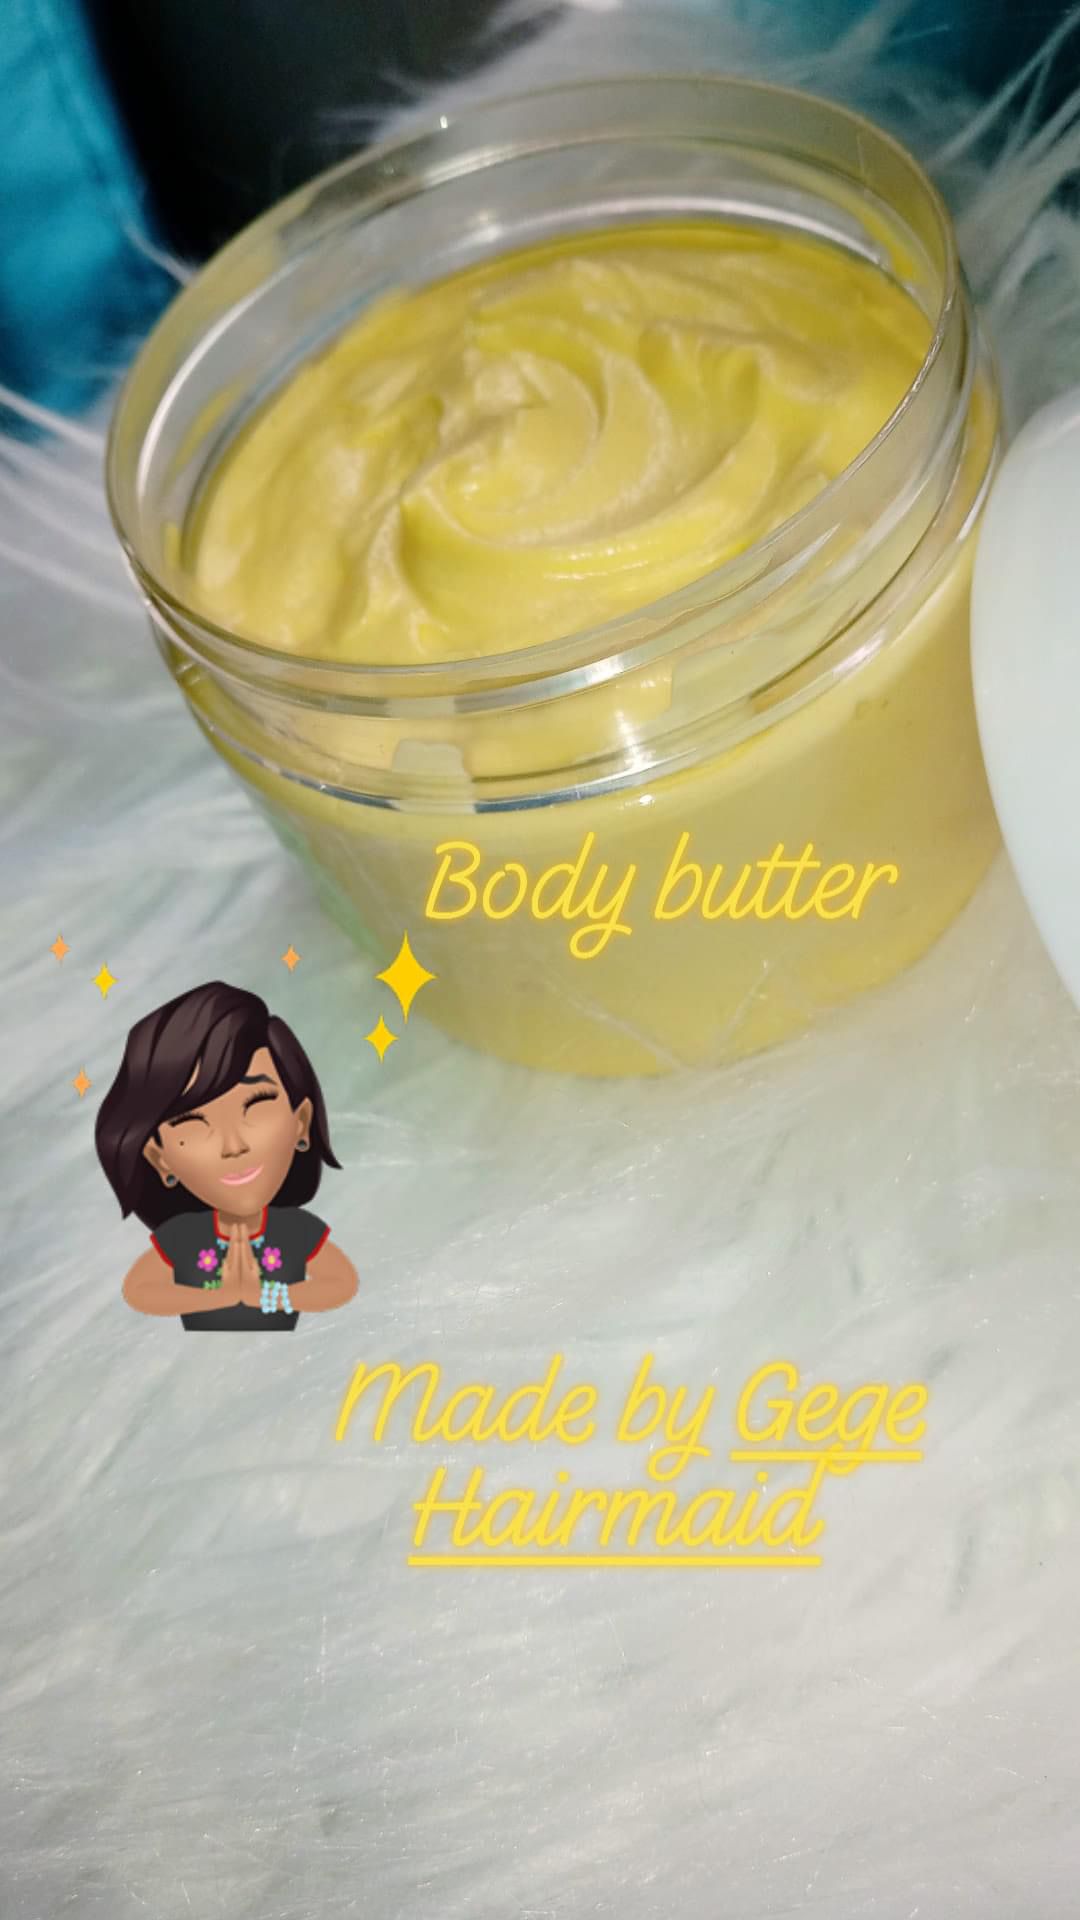 Body Butters